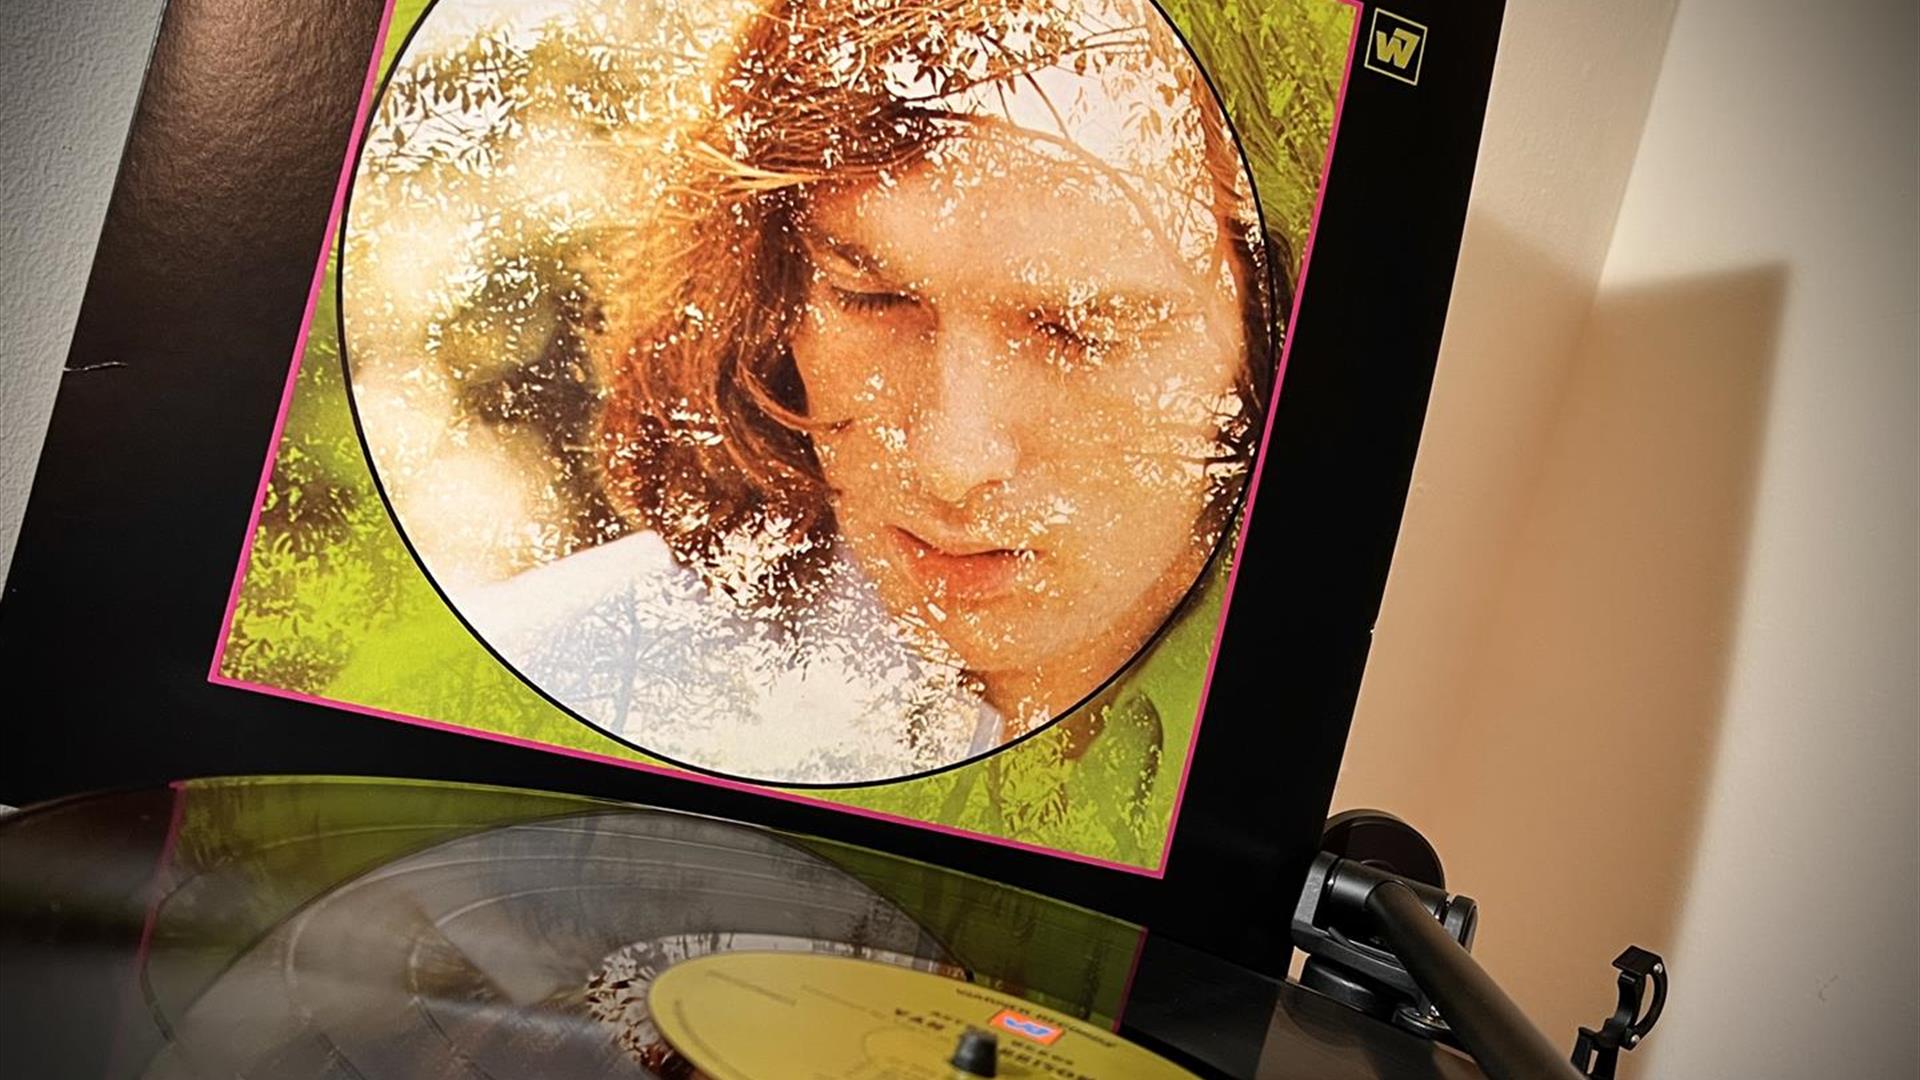 Album cover showing image of Van Morrison